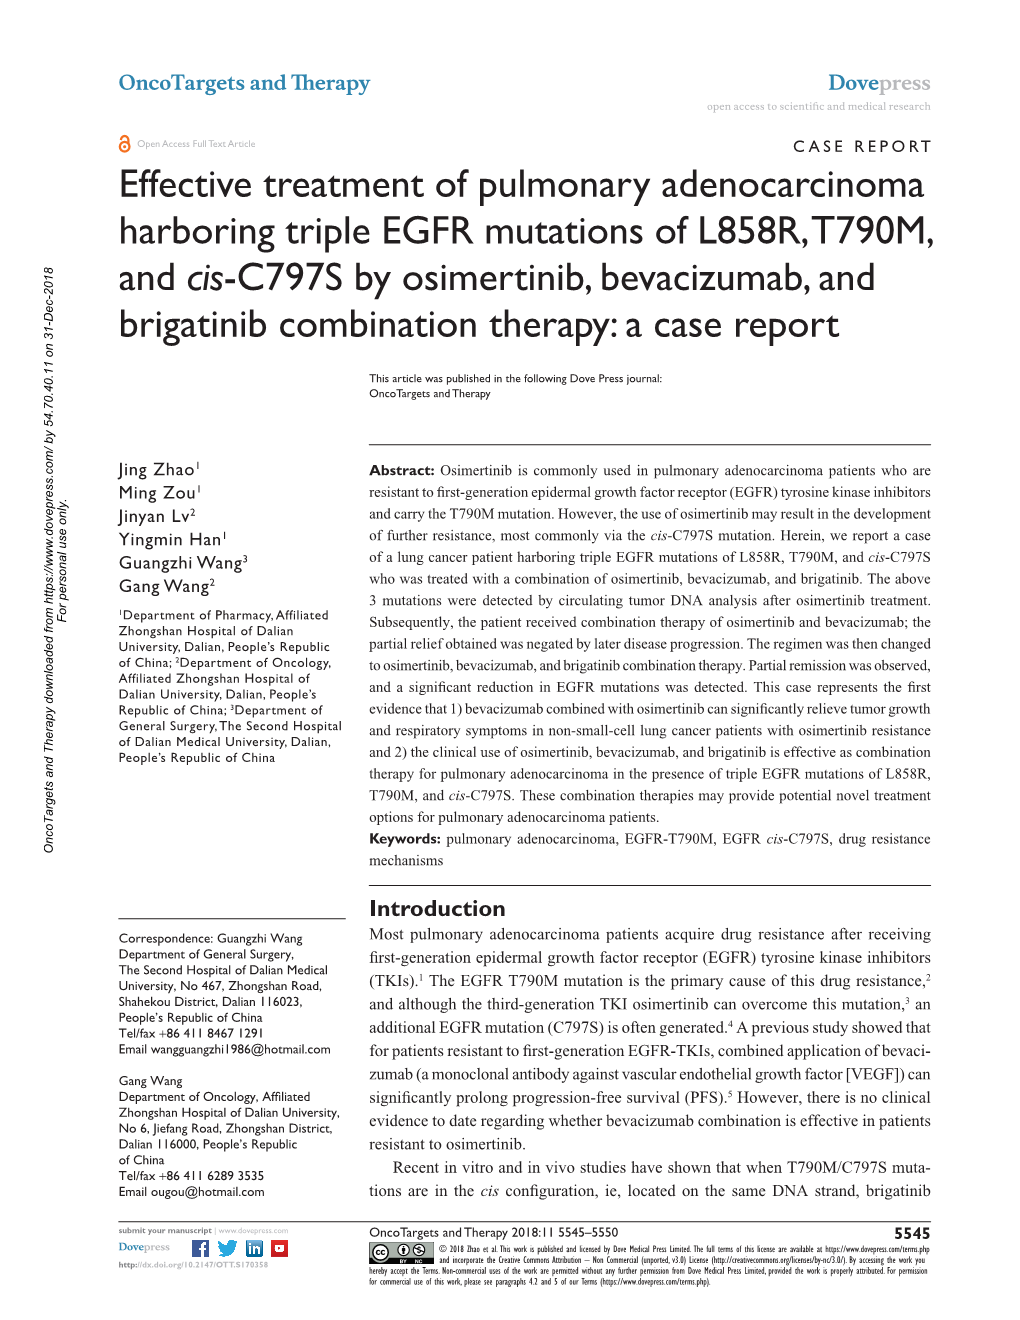 Effective Treatment of Pulmonary Adenocarcinoma Harboring Triple